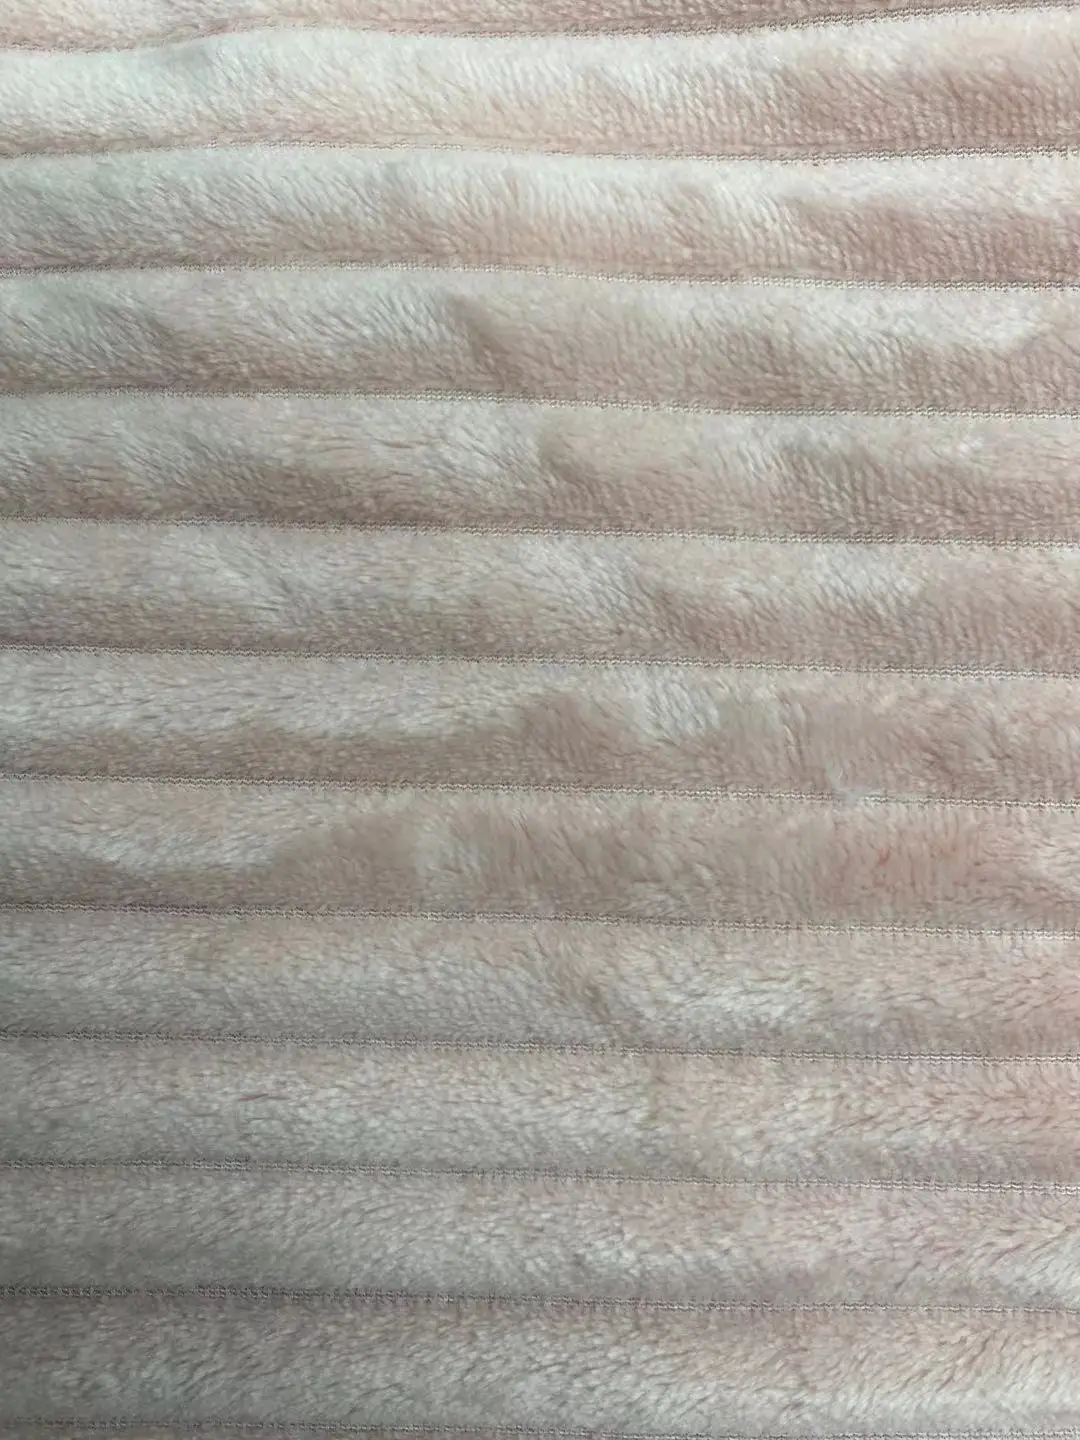 
super soft minky stripe flannel fleece fabric for ladies bathrobe fabric for blanket fabric 